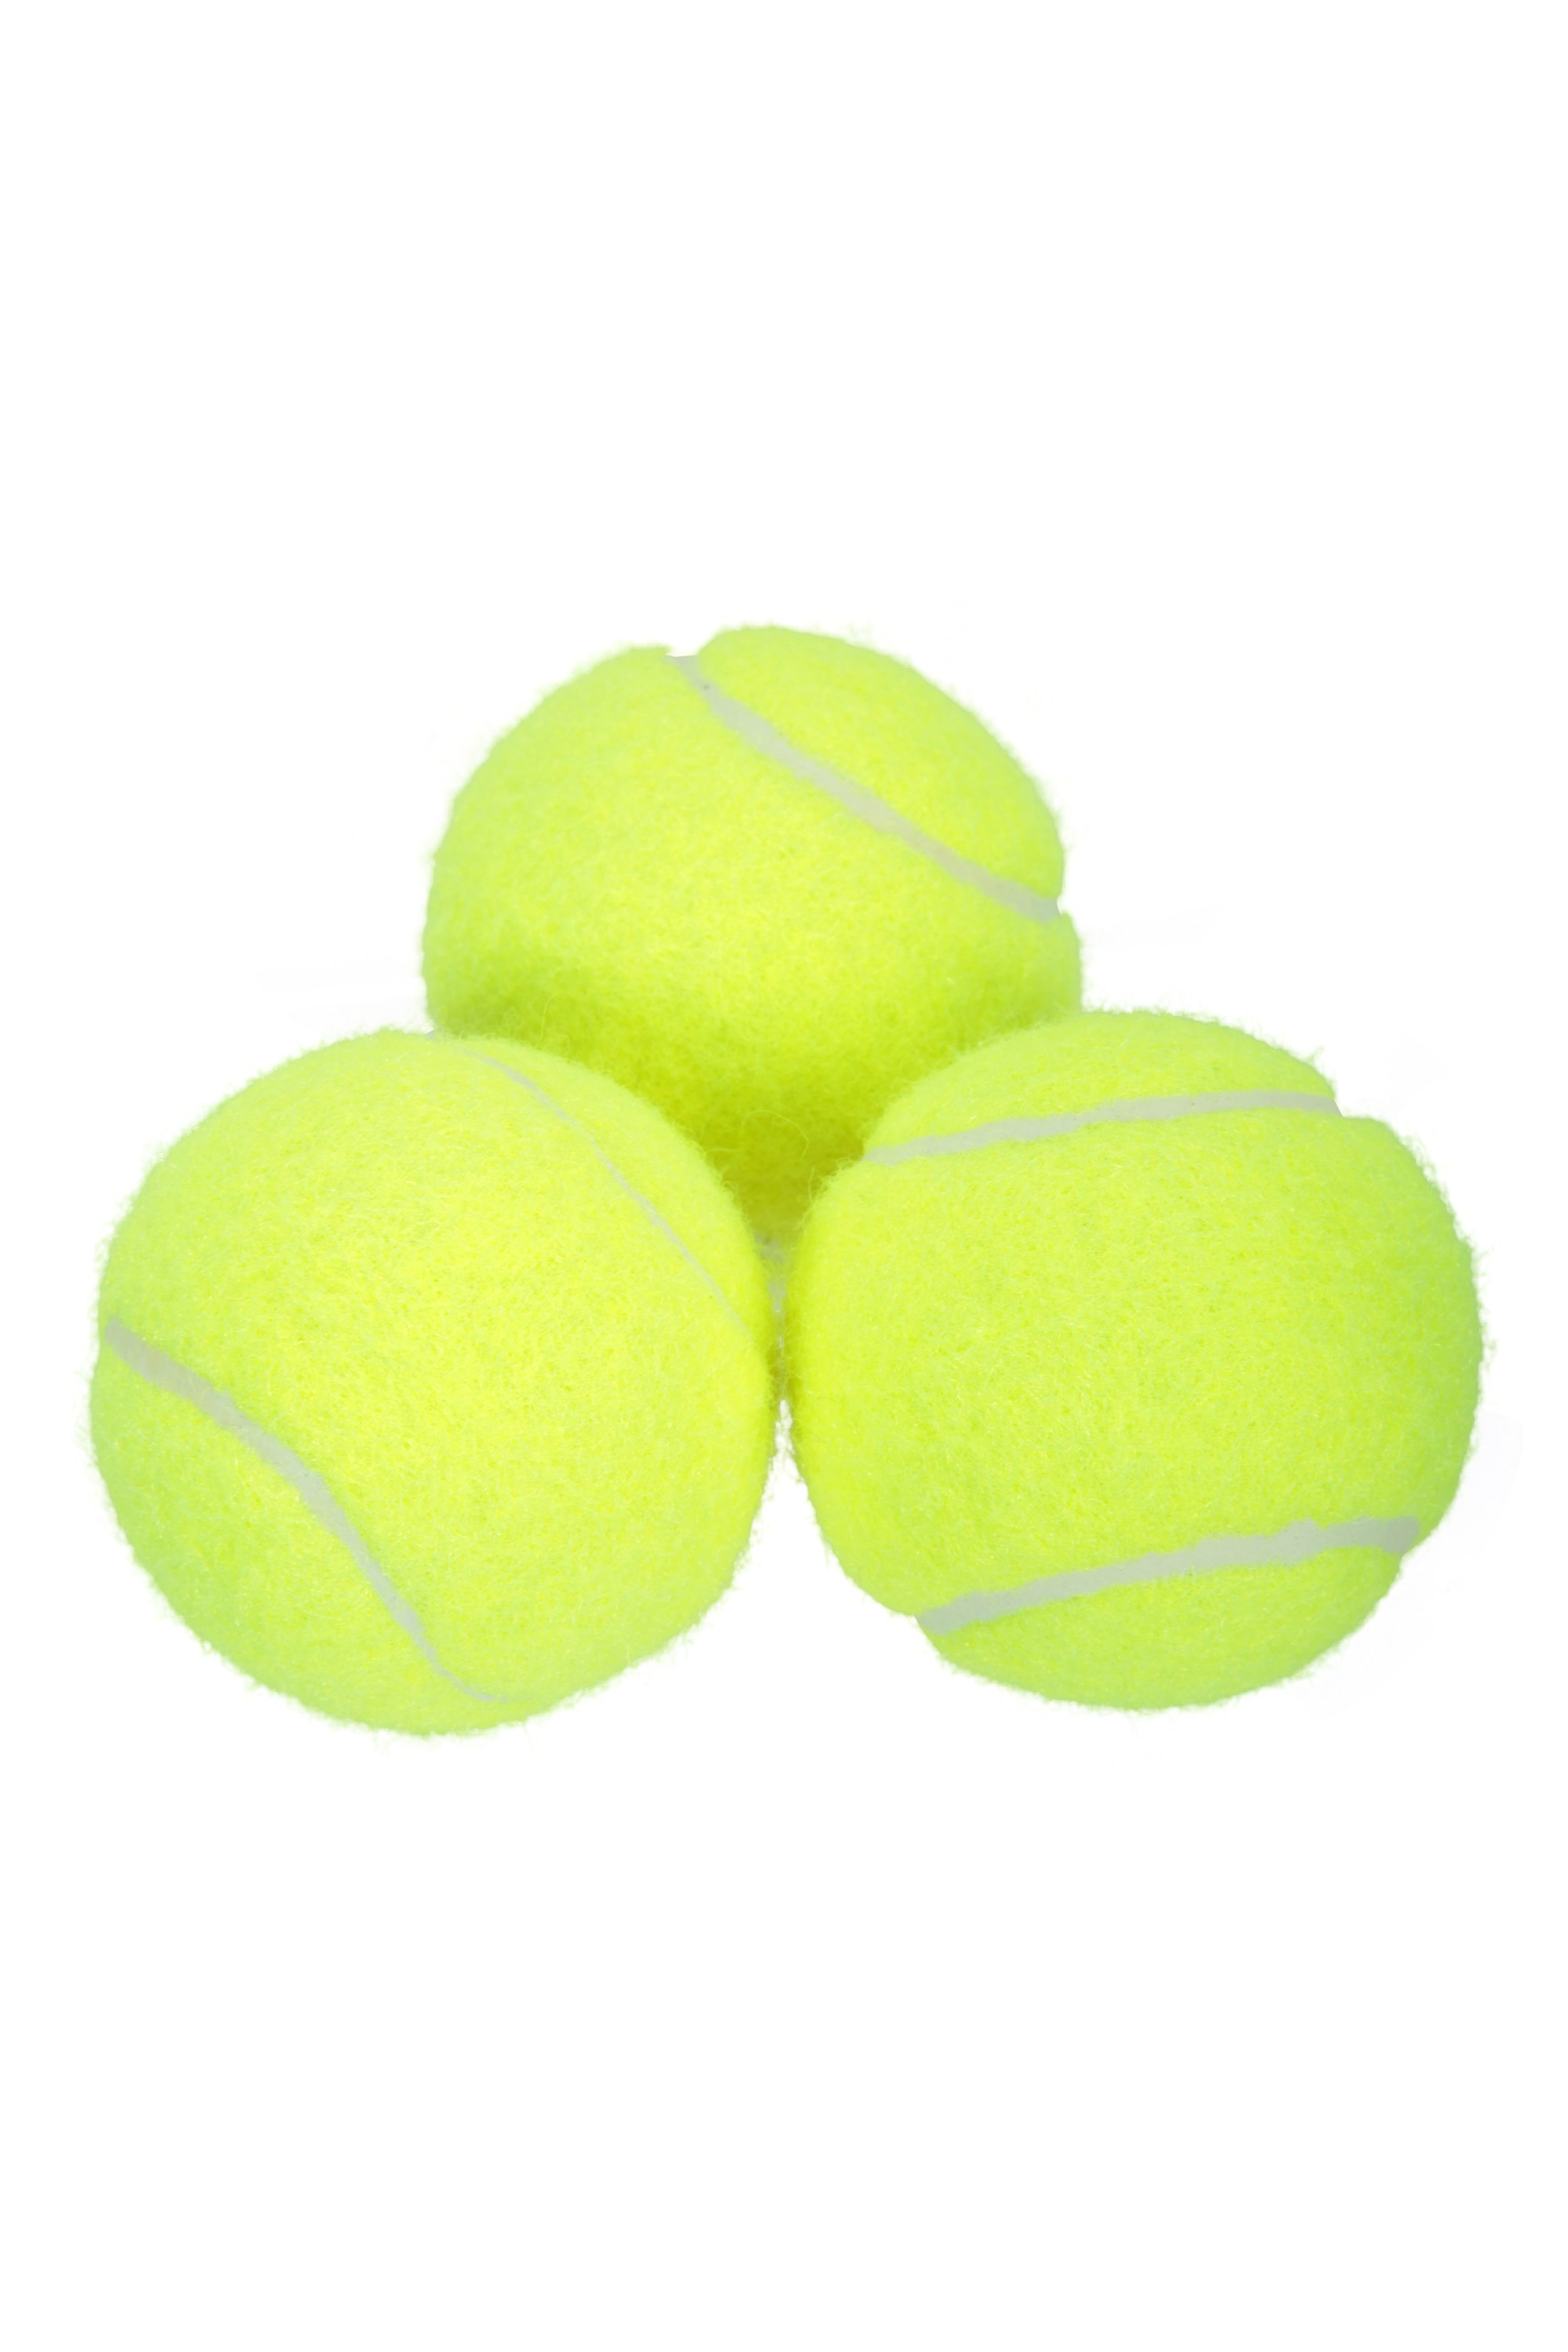 Mini Balles de Tennis - 3 - Jaune